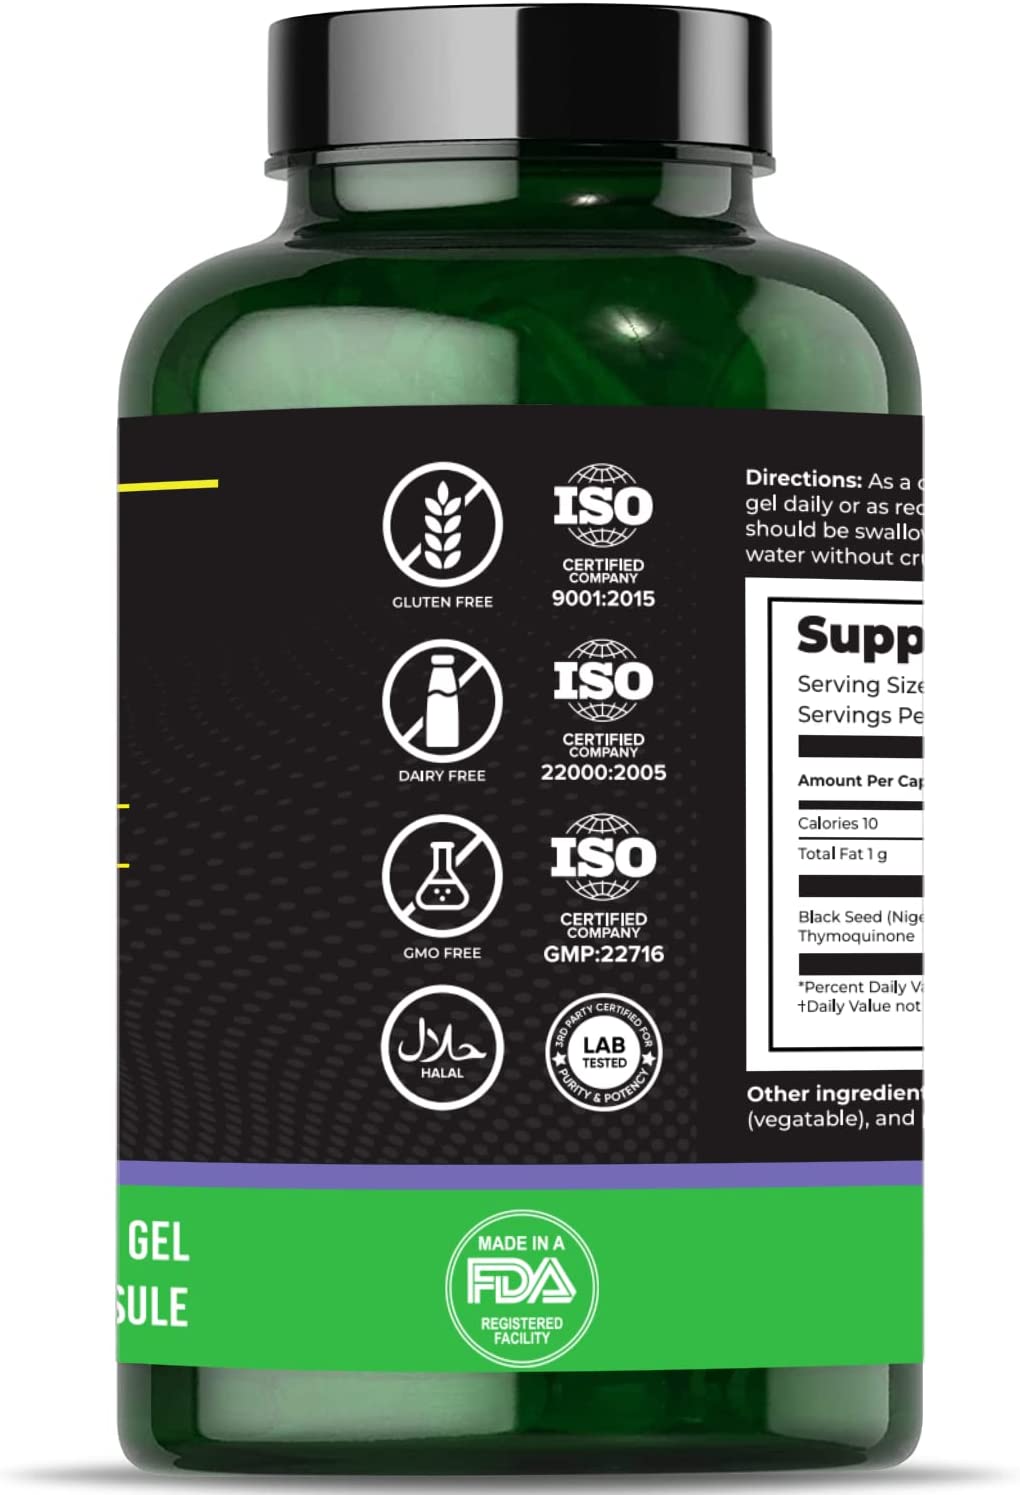 Black Seed Oil Capsules, 90 Days Supply, 2% Thymoquinone, Non-GMO, Gluten Free